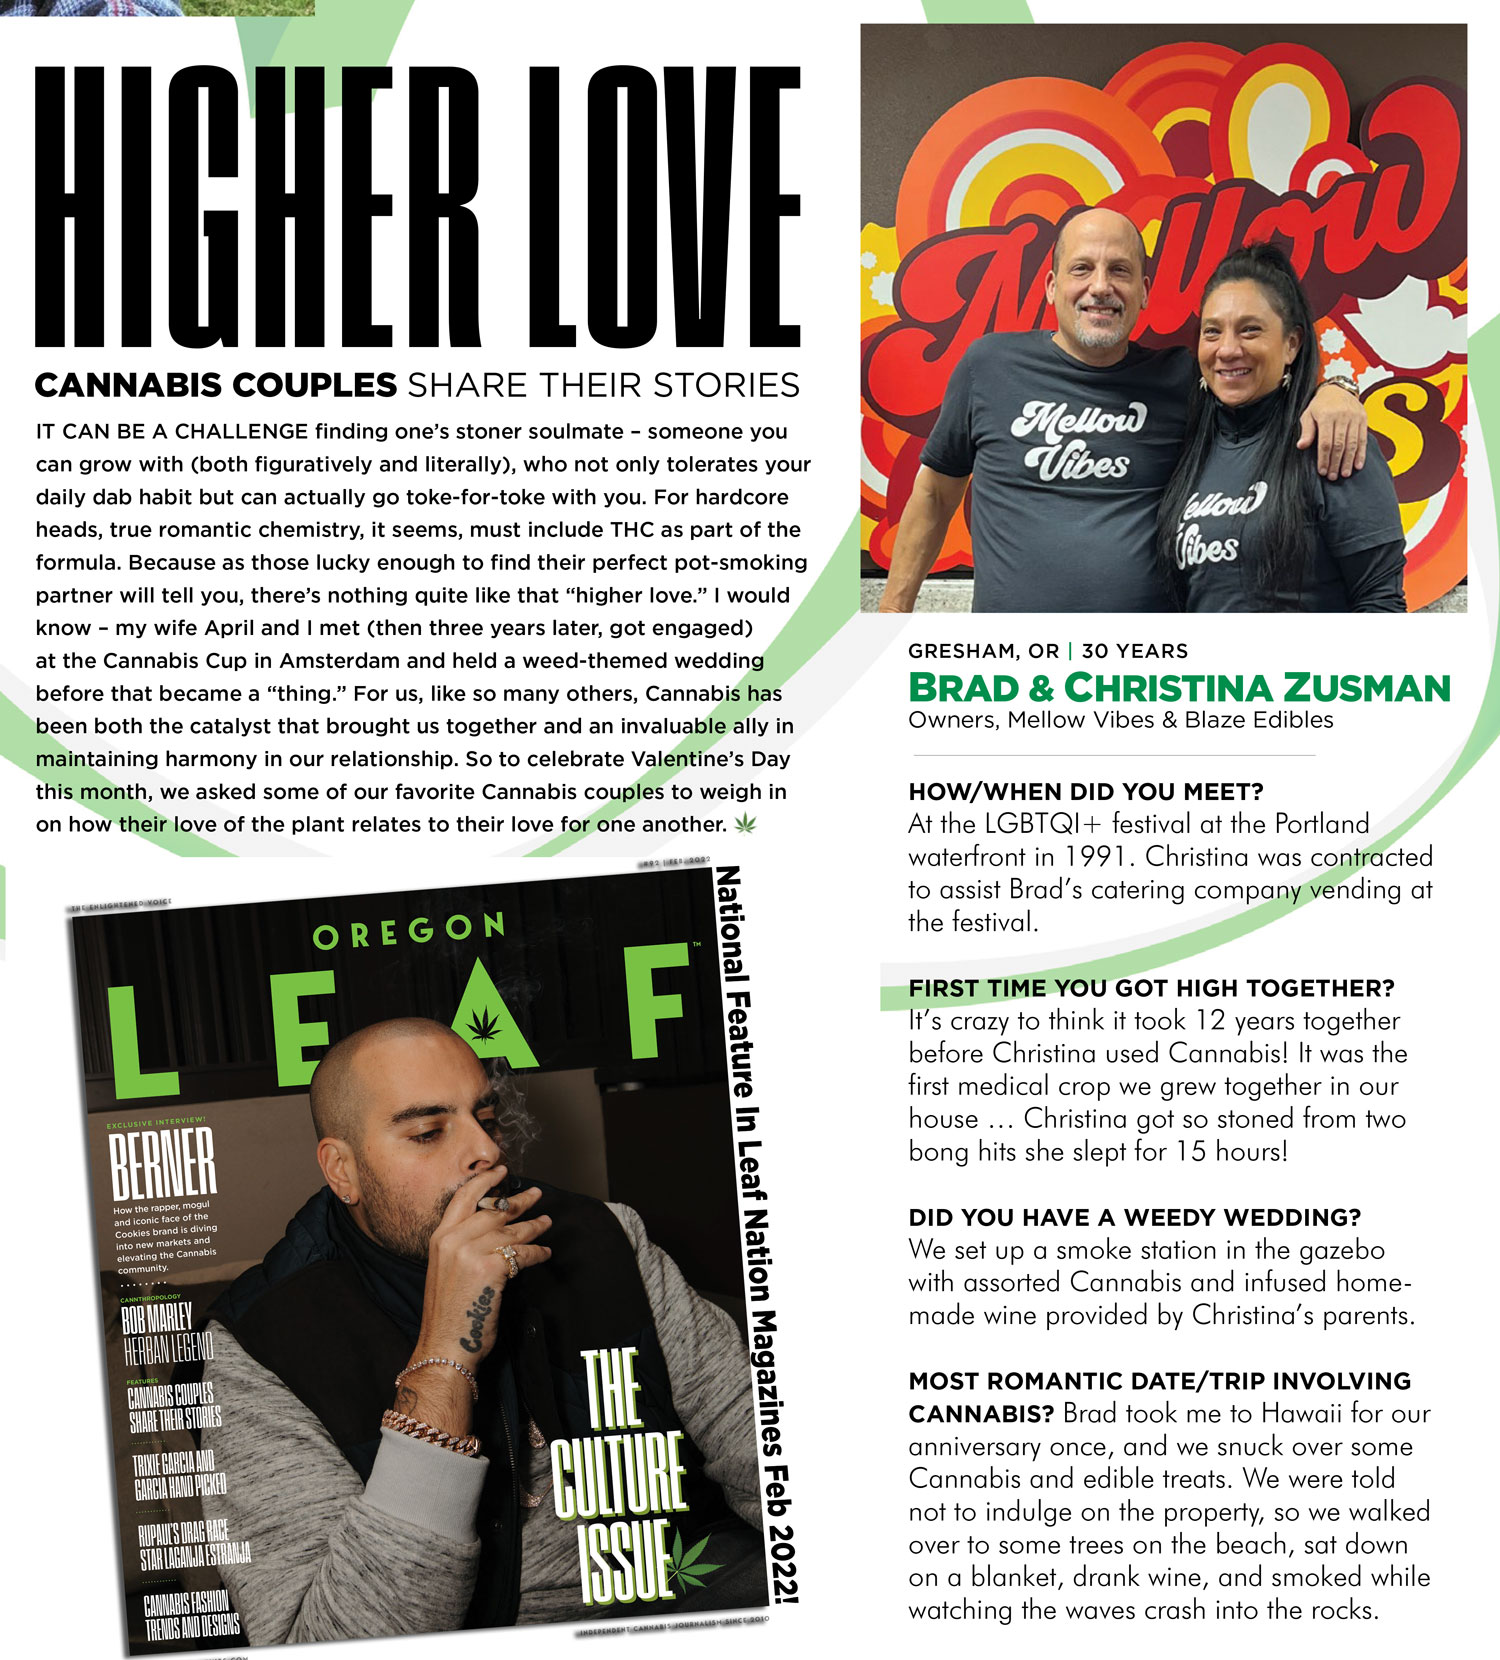 Brad & Christina Zusman - Higher Love Feature - Leaf Magazines